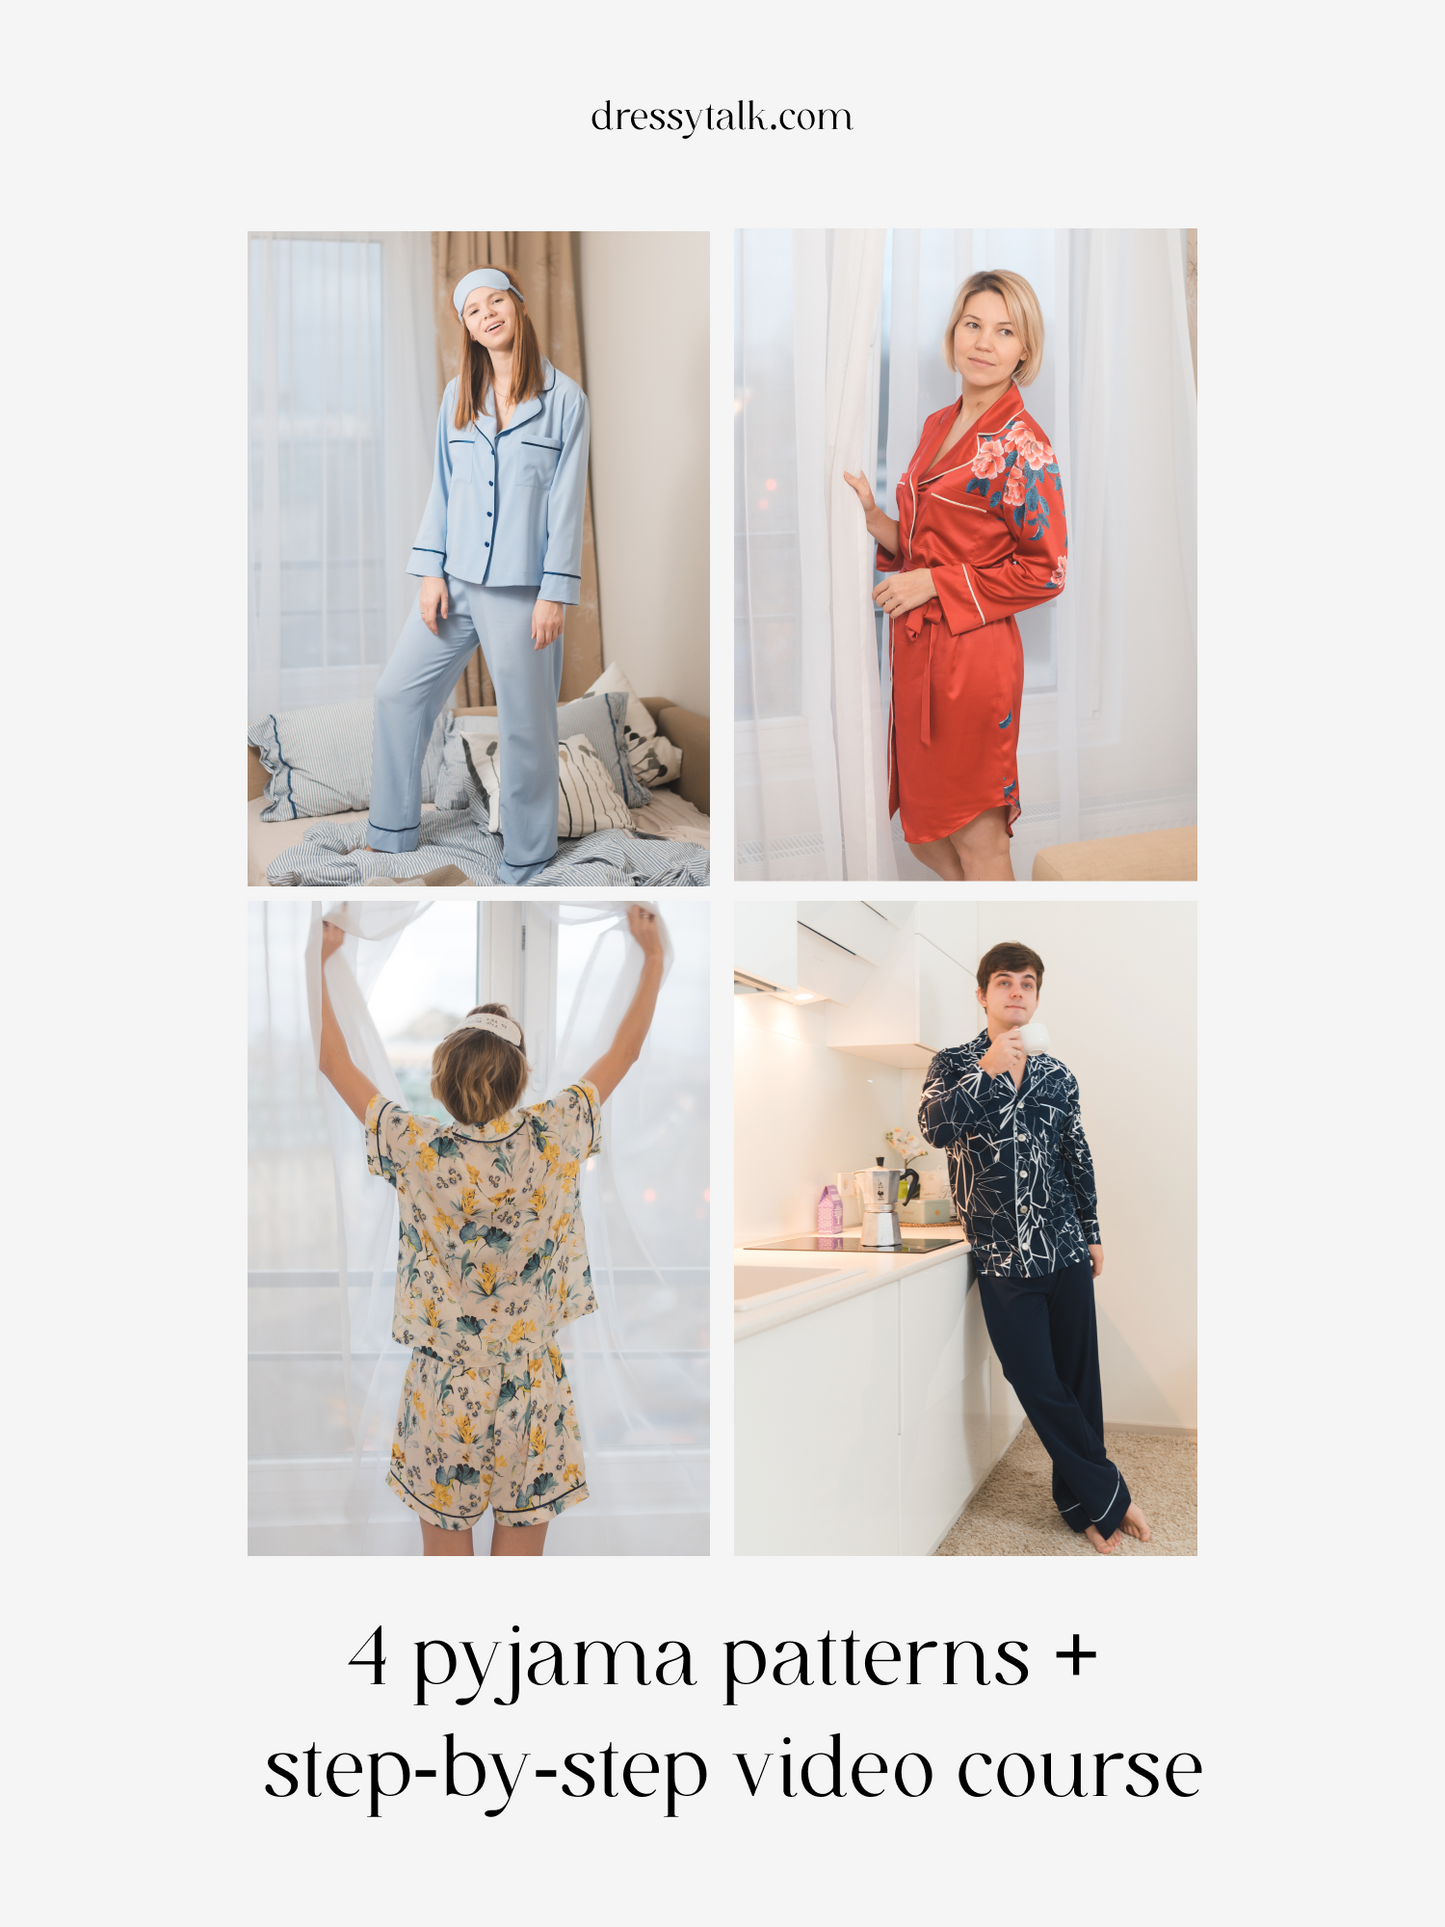 Video course: 4 pyjama patterns + step-by-step video tutorial